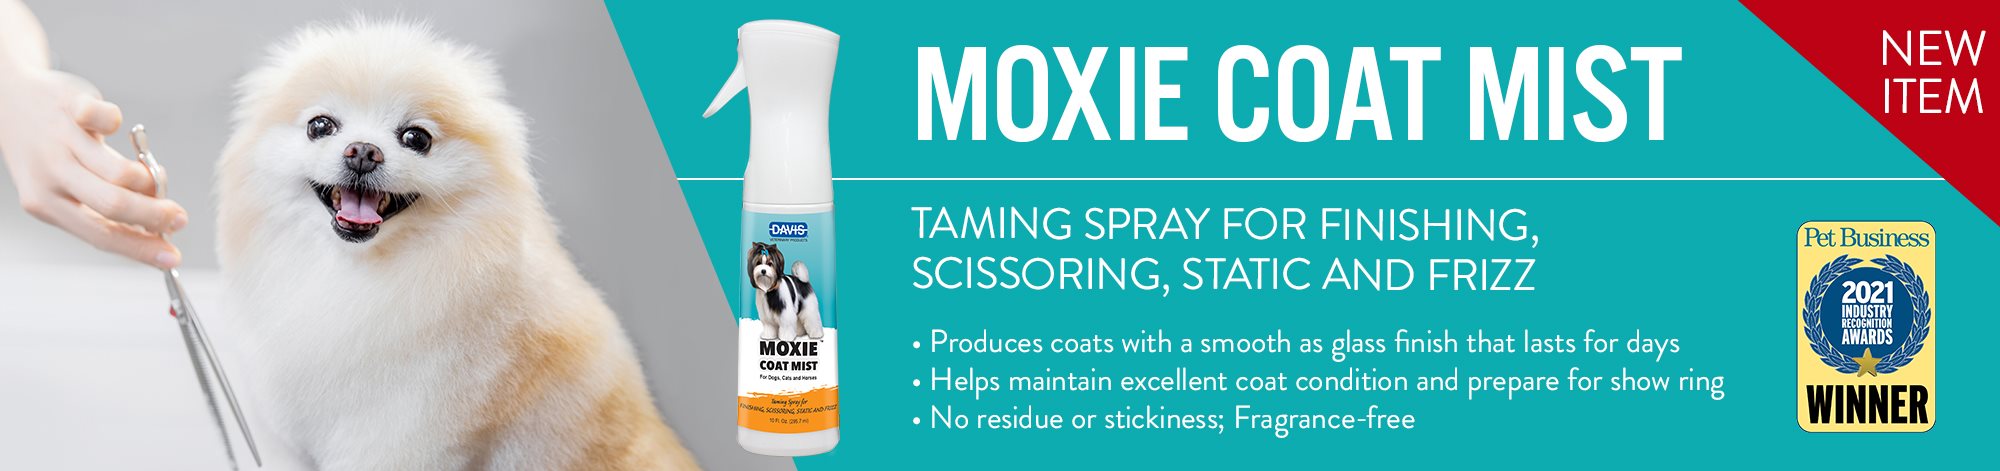 Moxie Coat Mist. Taming spray for fishing, scissoring, static